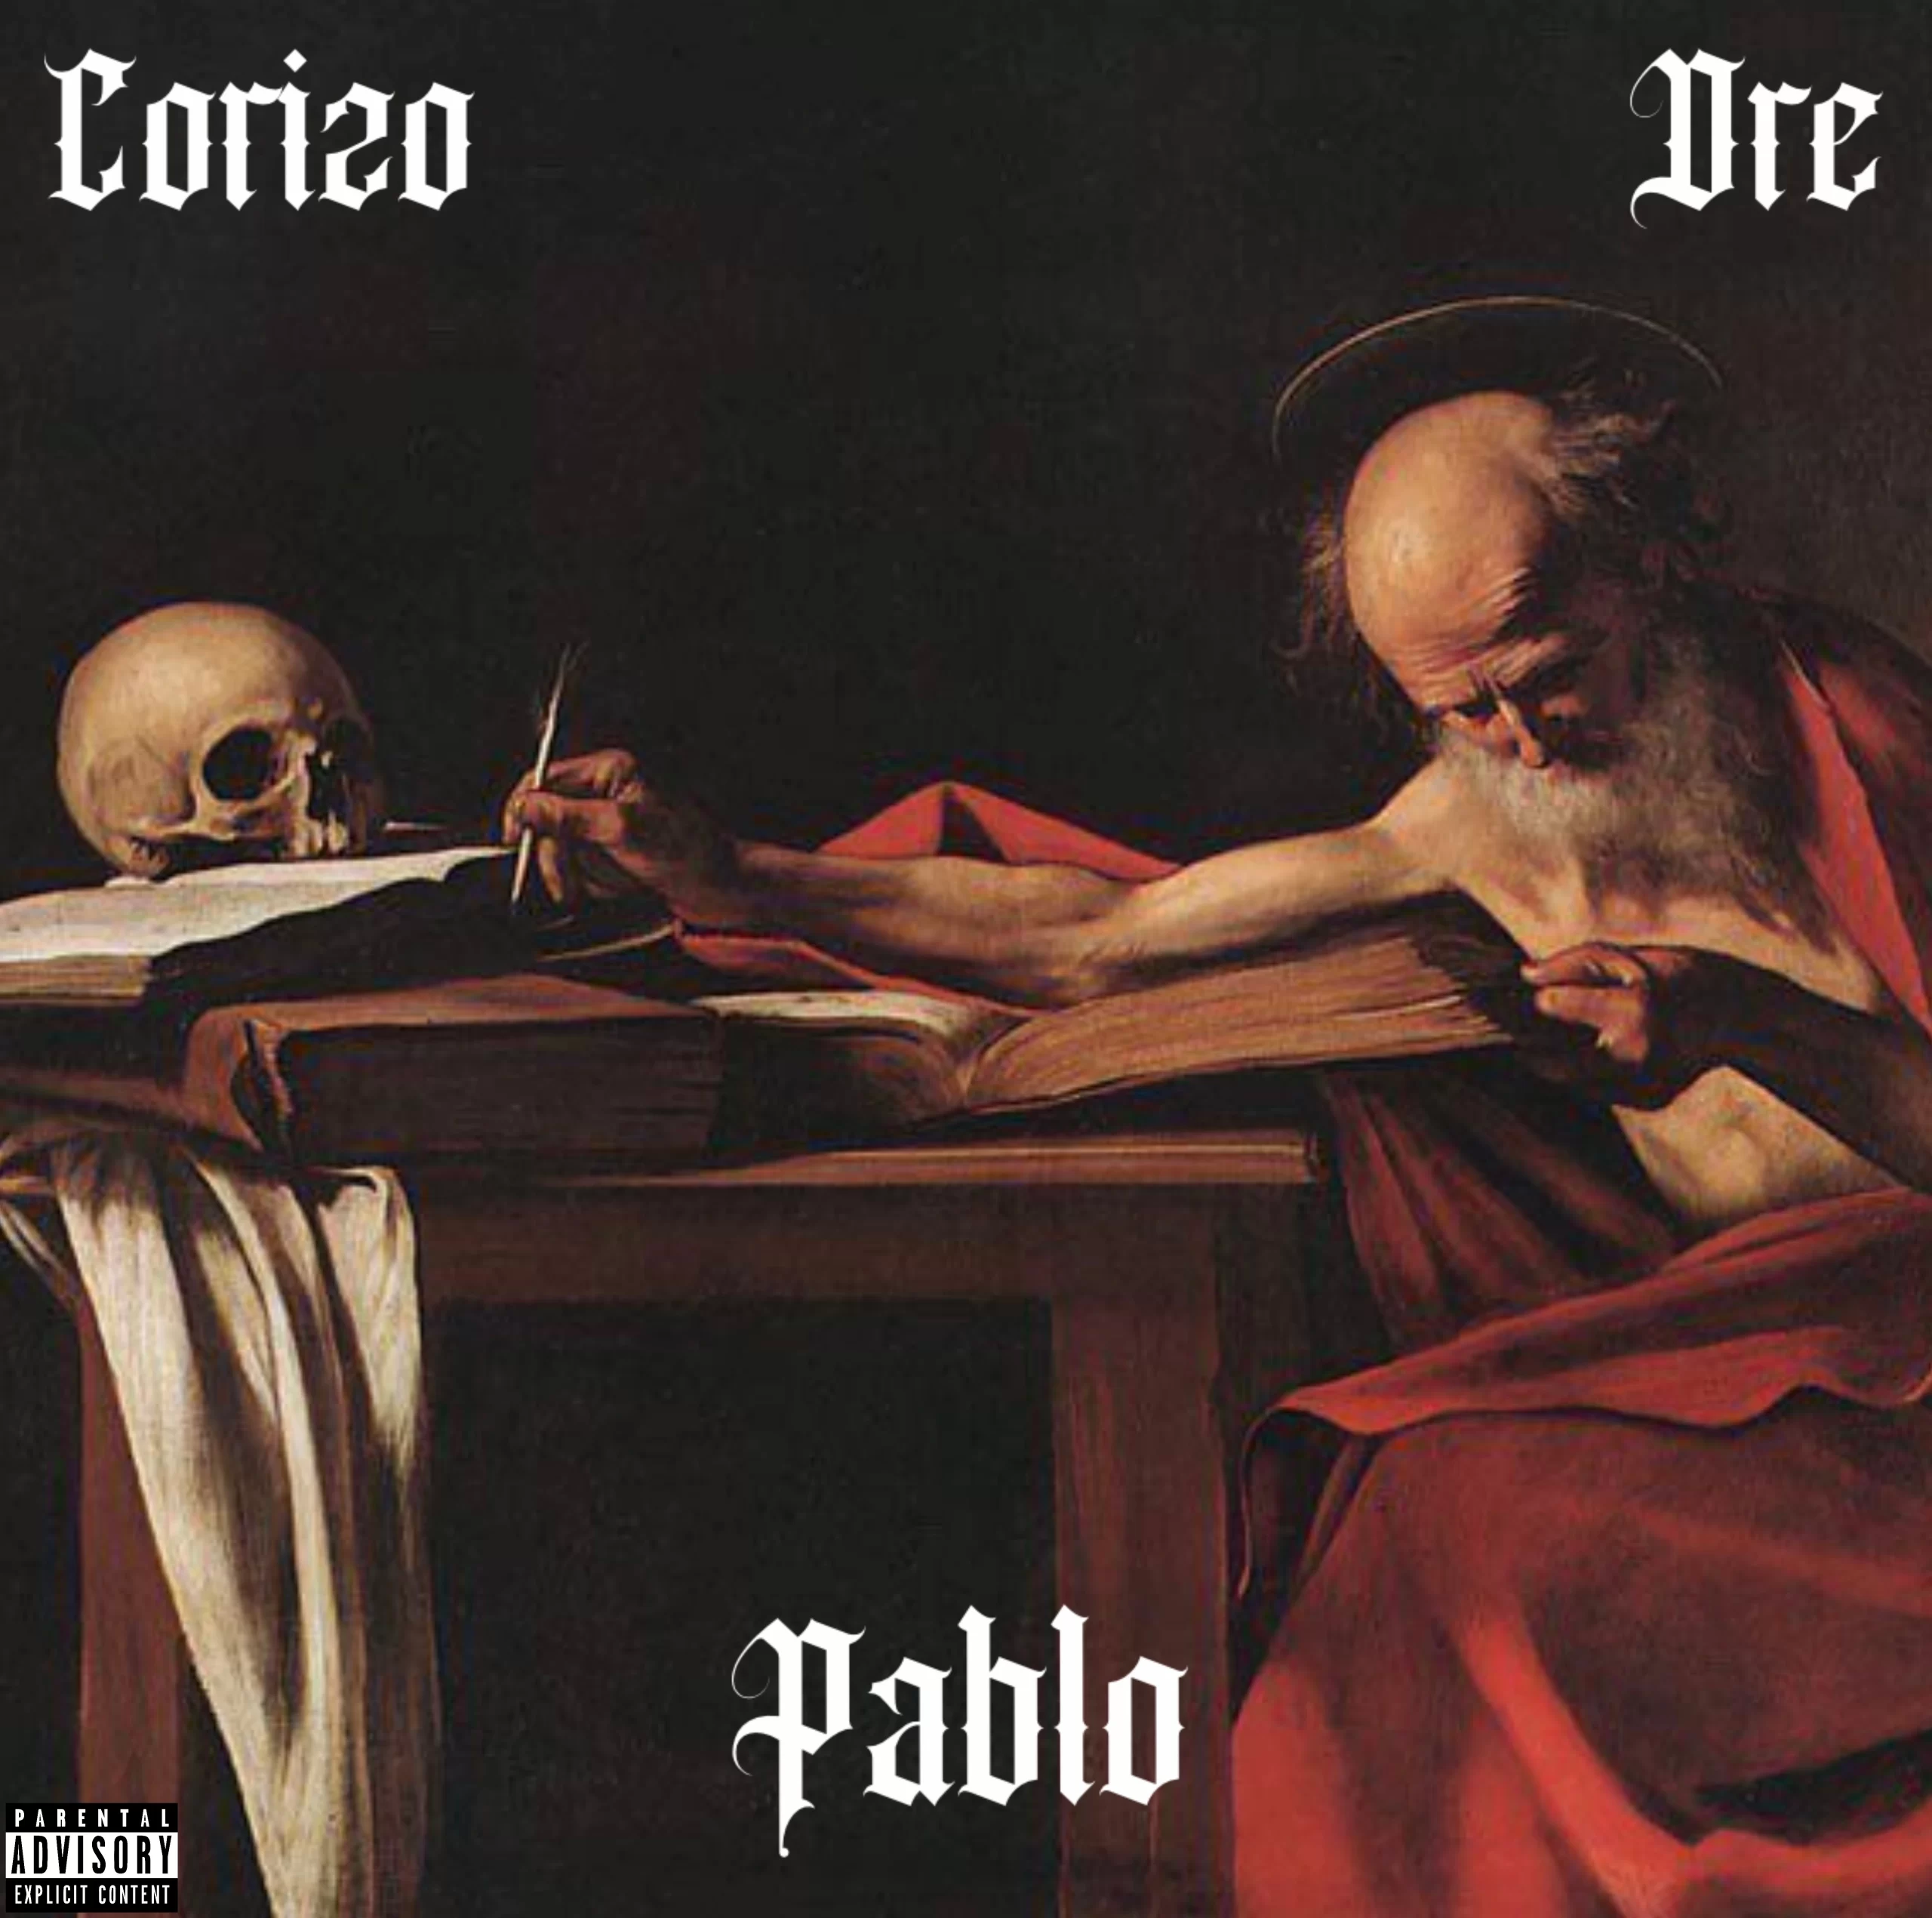 Corizo ft. Dre – Pablo